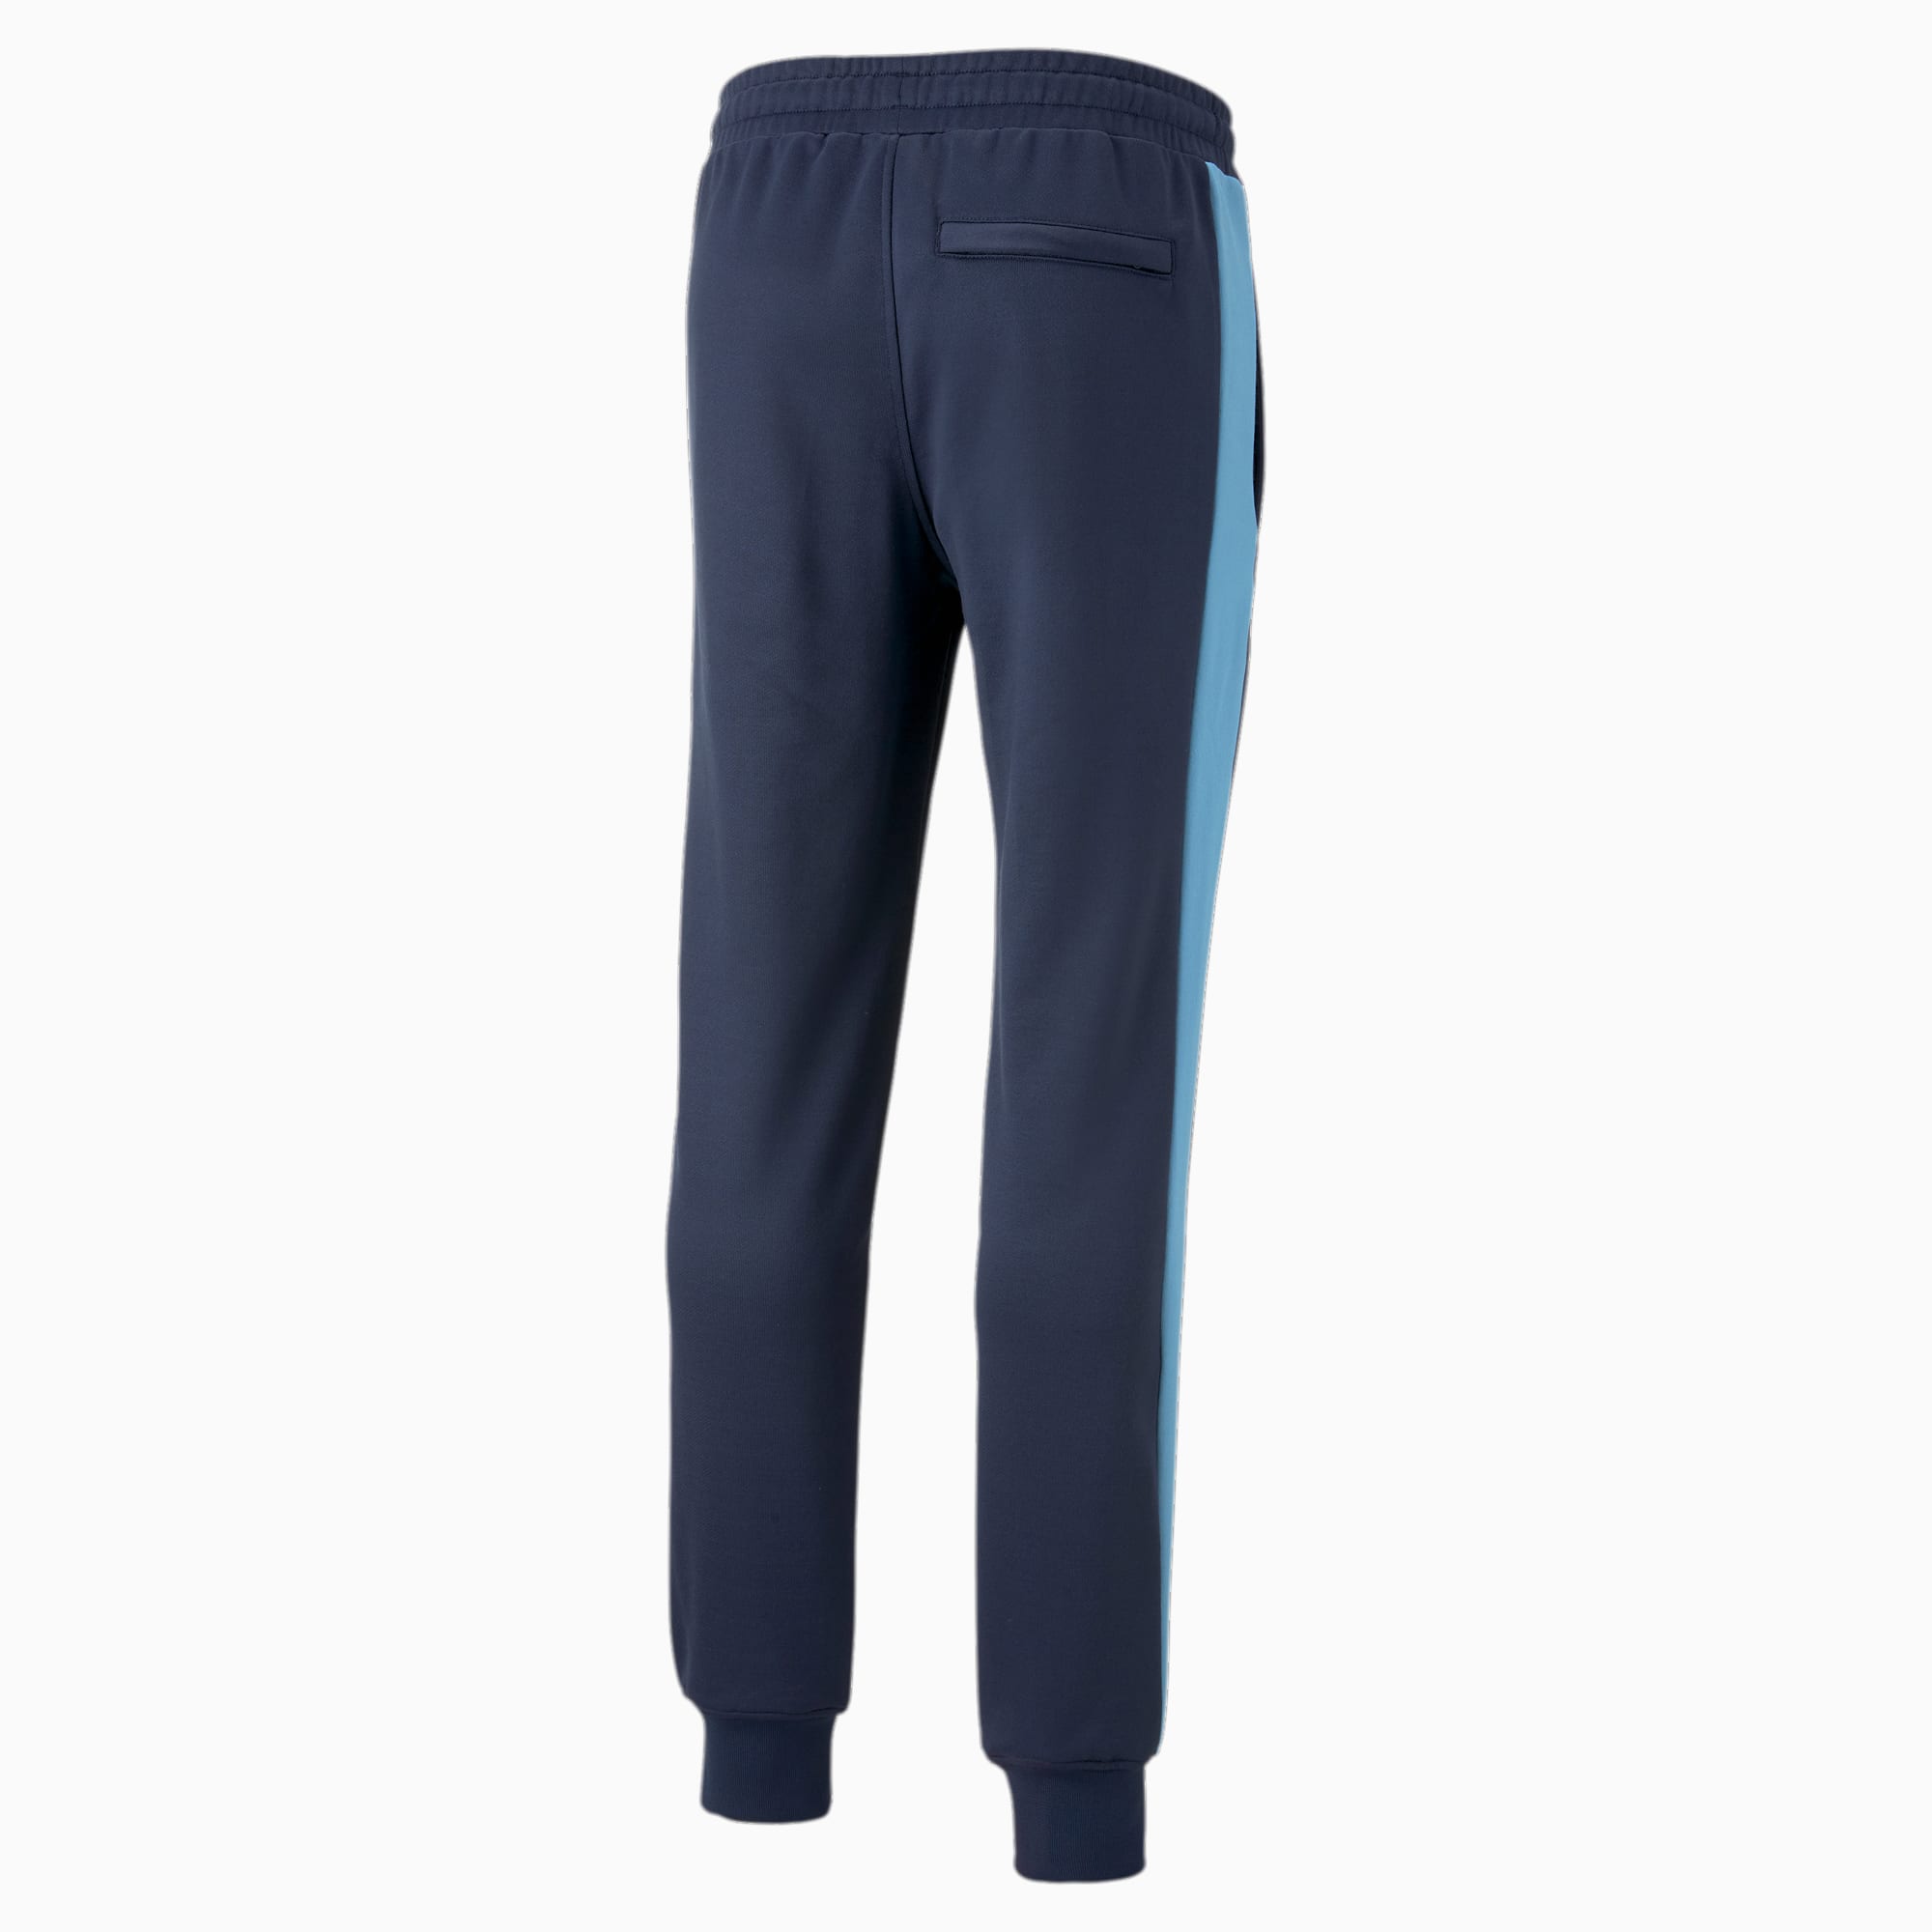 Pantalones Deportivos The Neverworn Ii T7 para Hombre, Azul